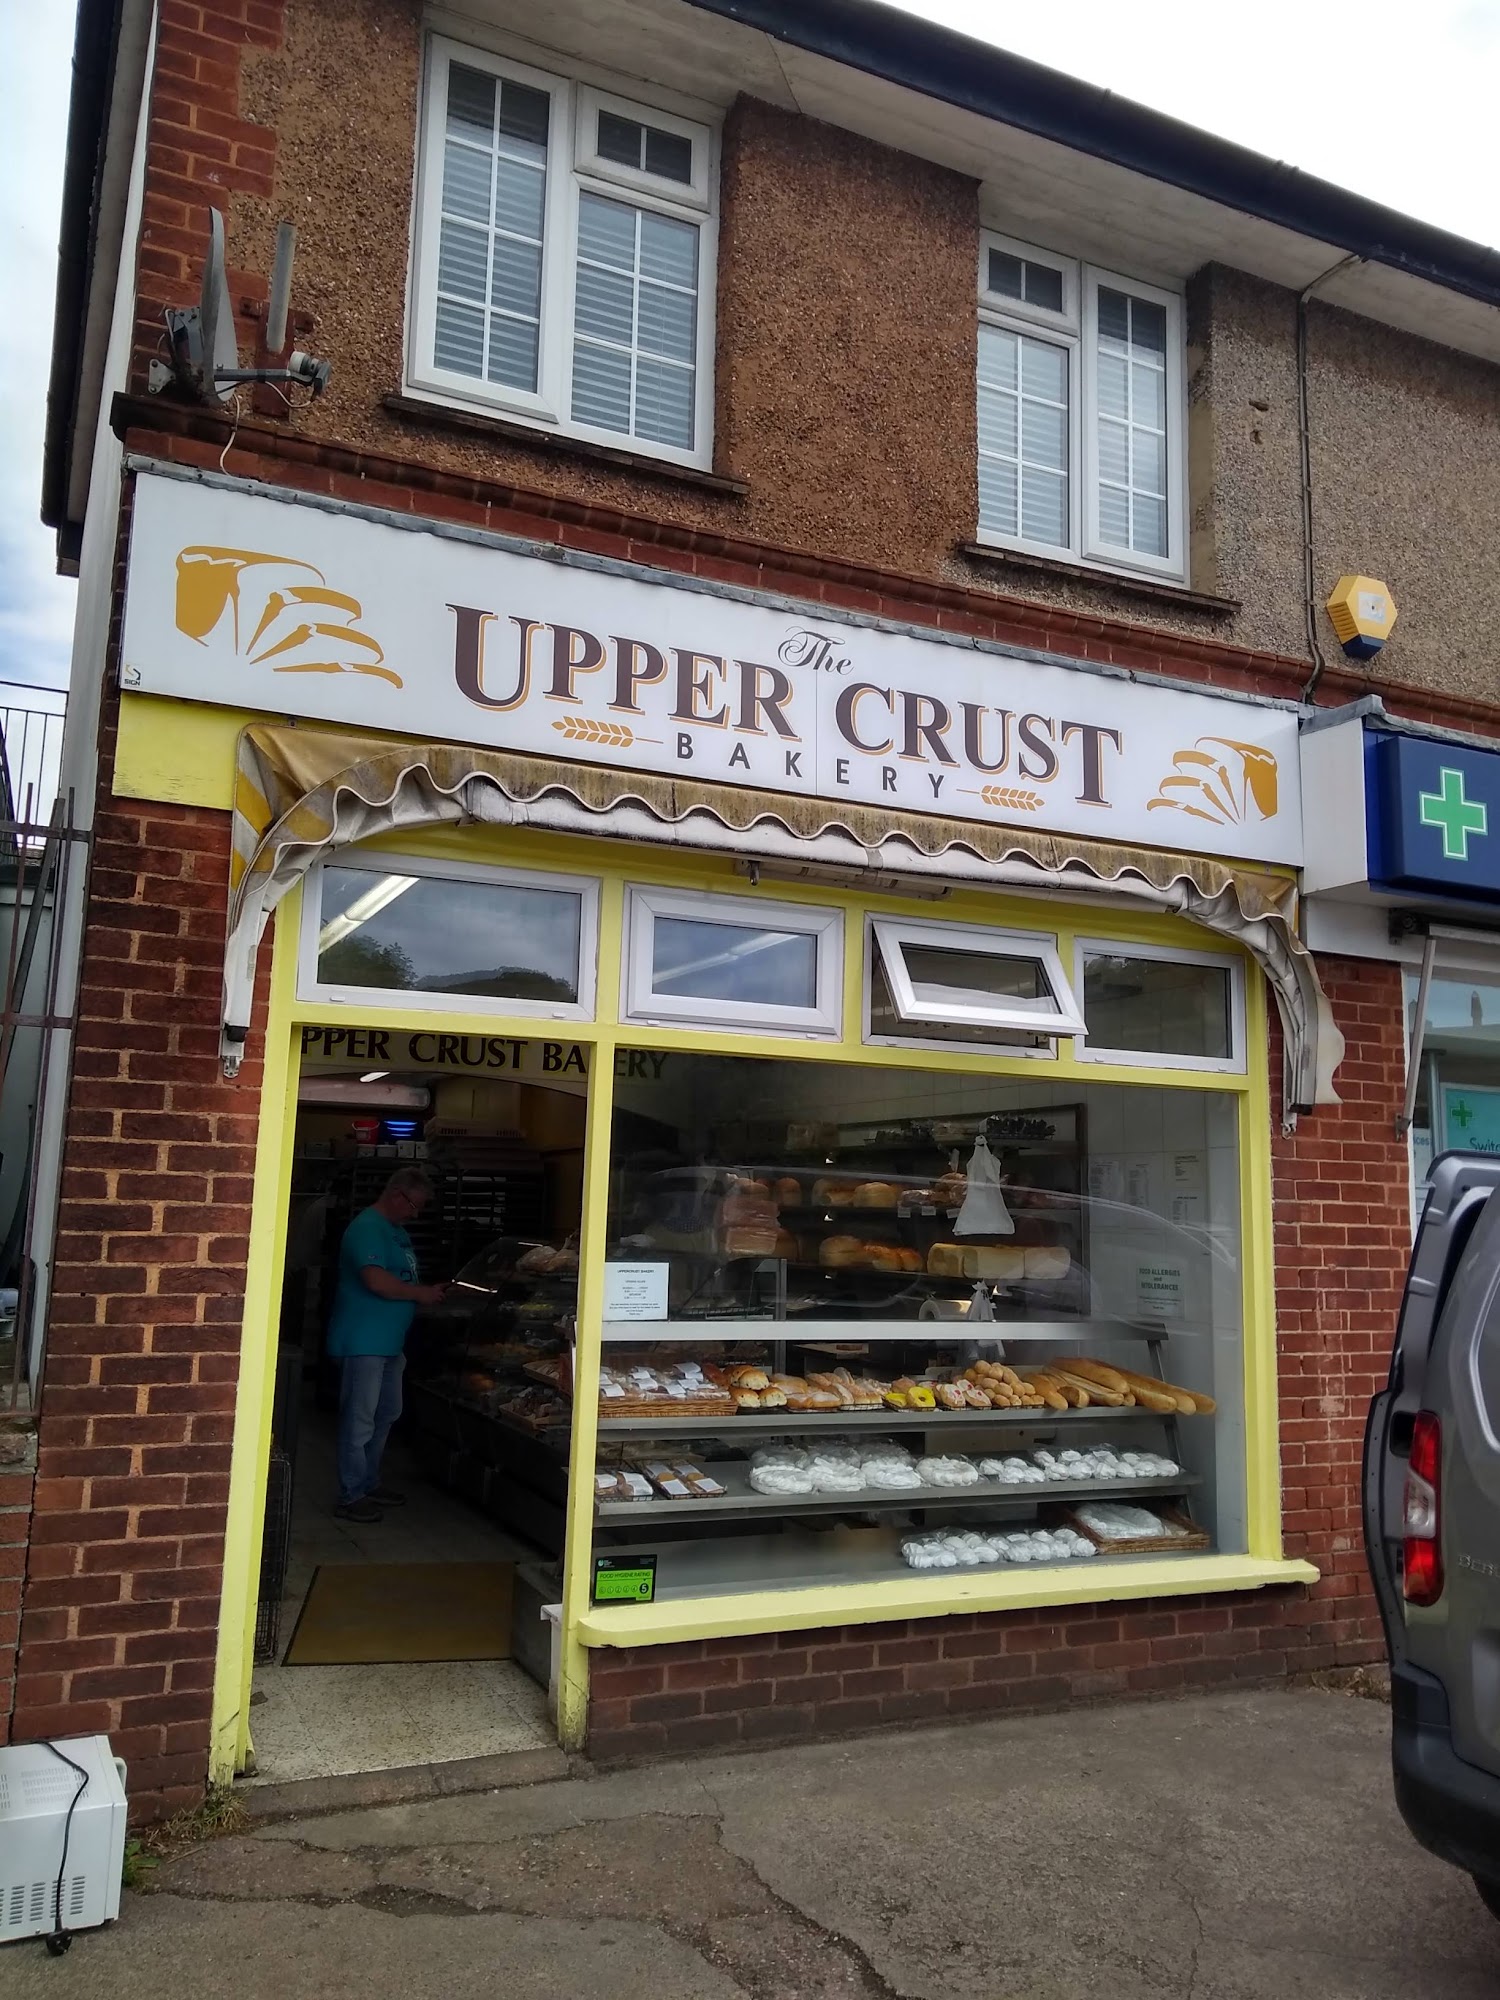 The Upper Crust Bakery